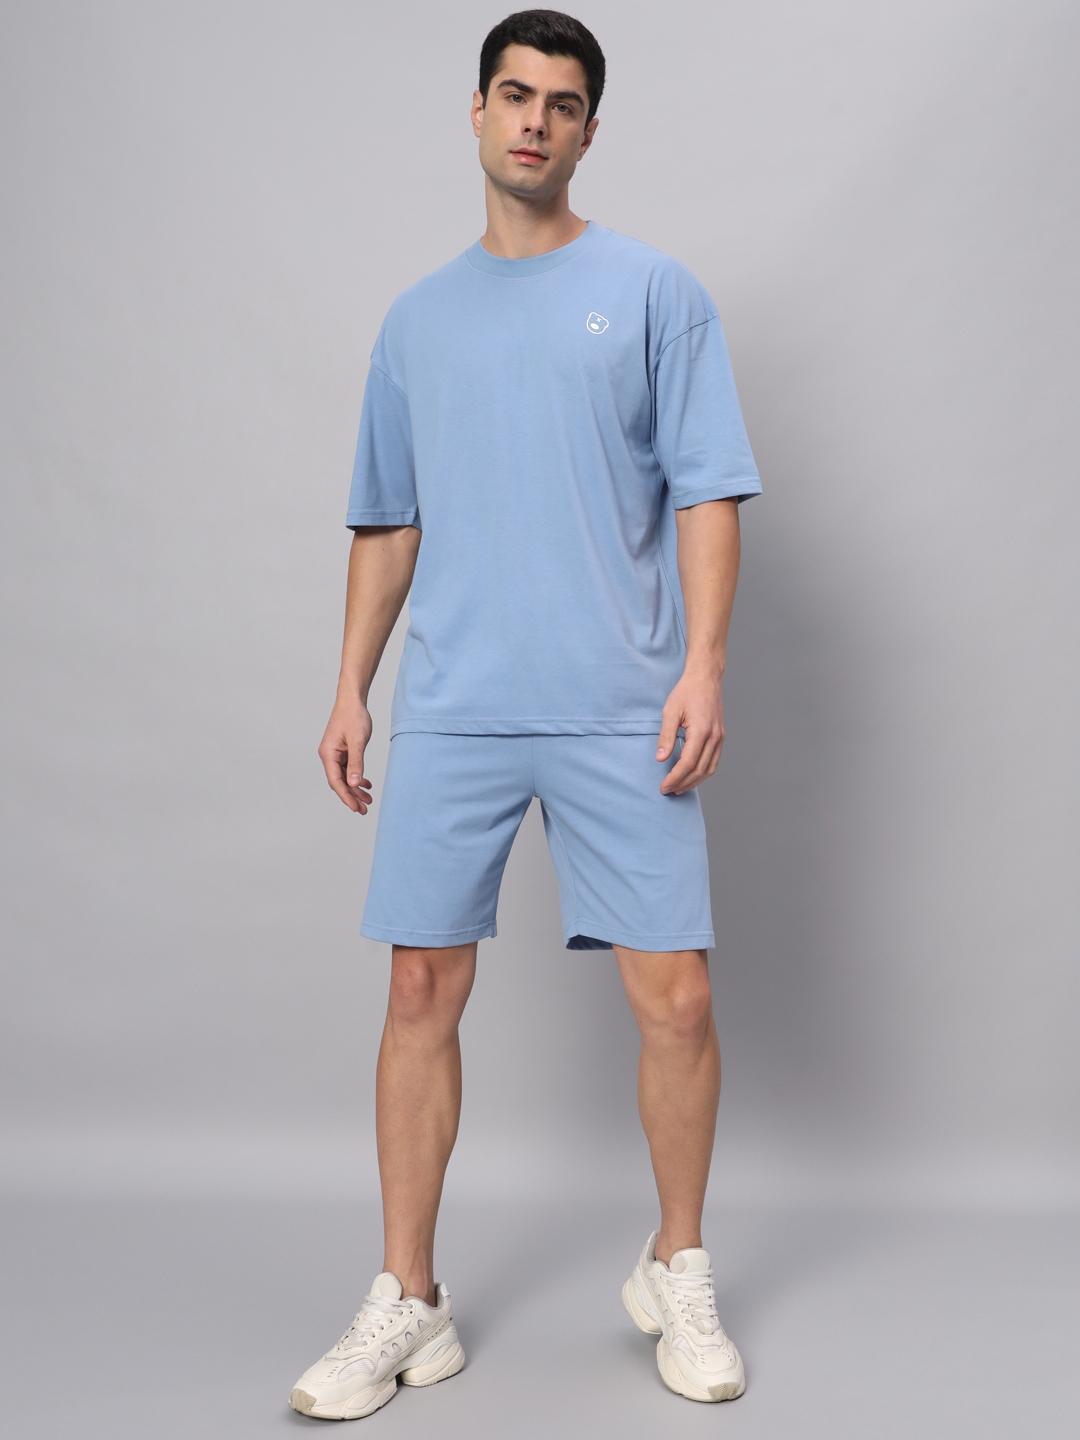 Men's Multi Cotton Loose Printed   Activewear T-Shirts